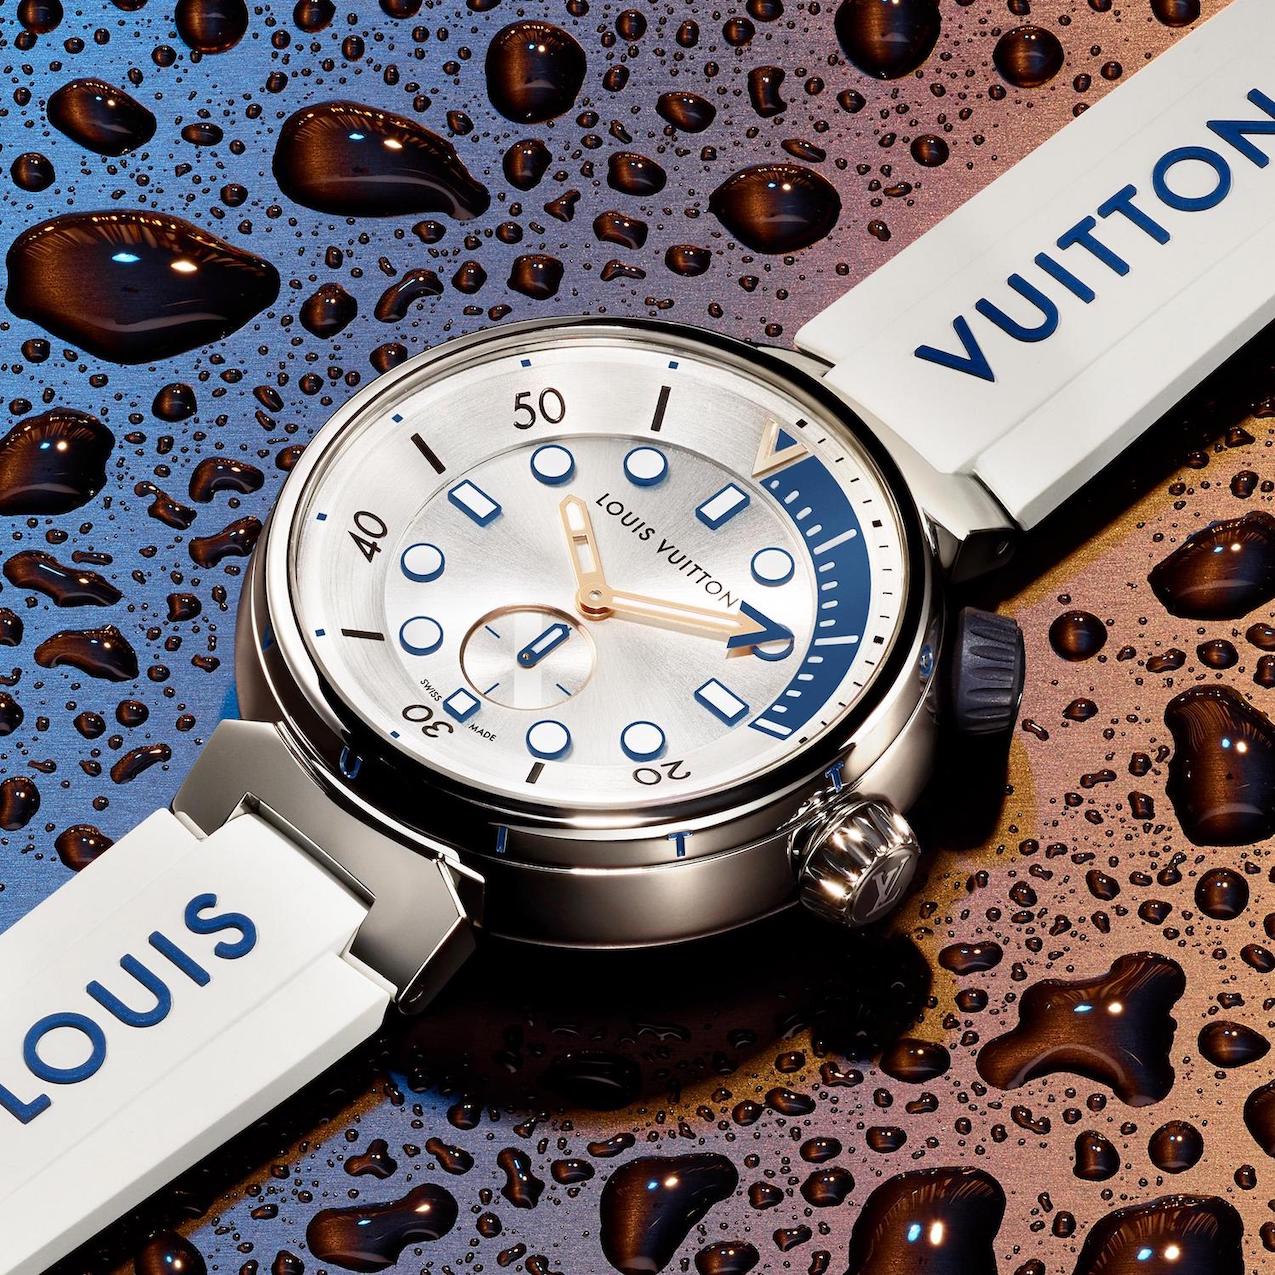 Louis Vuitton Tambour Street Diver, Quartz, 39.5mm, Steel & Rose Gold White